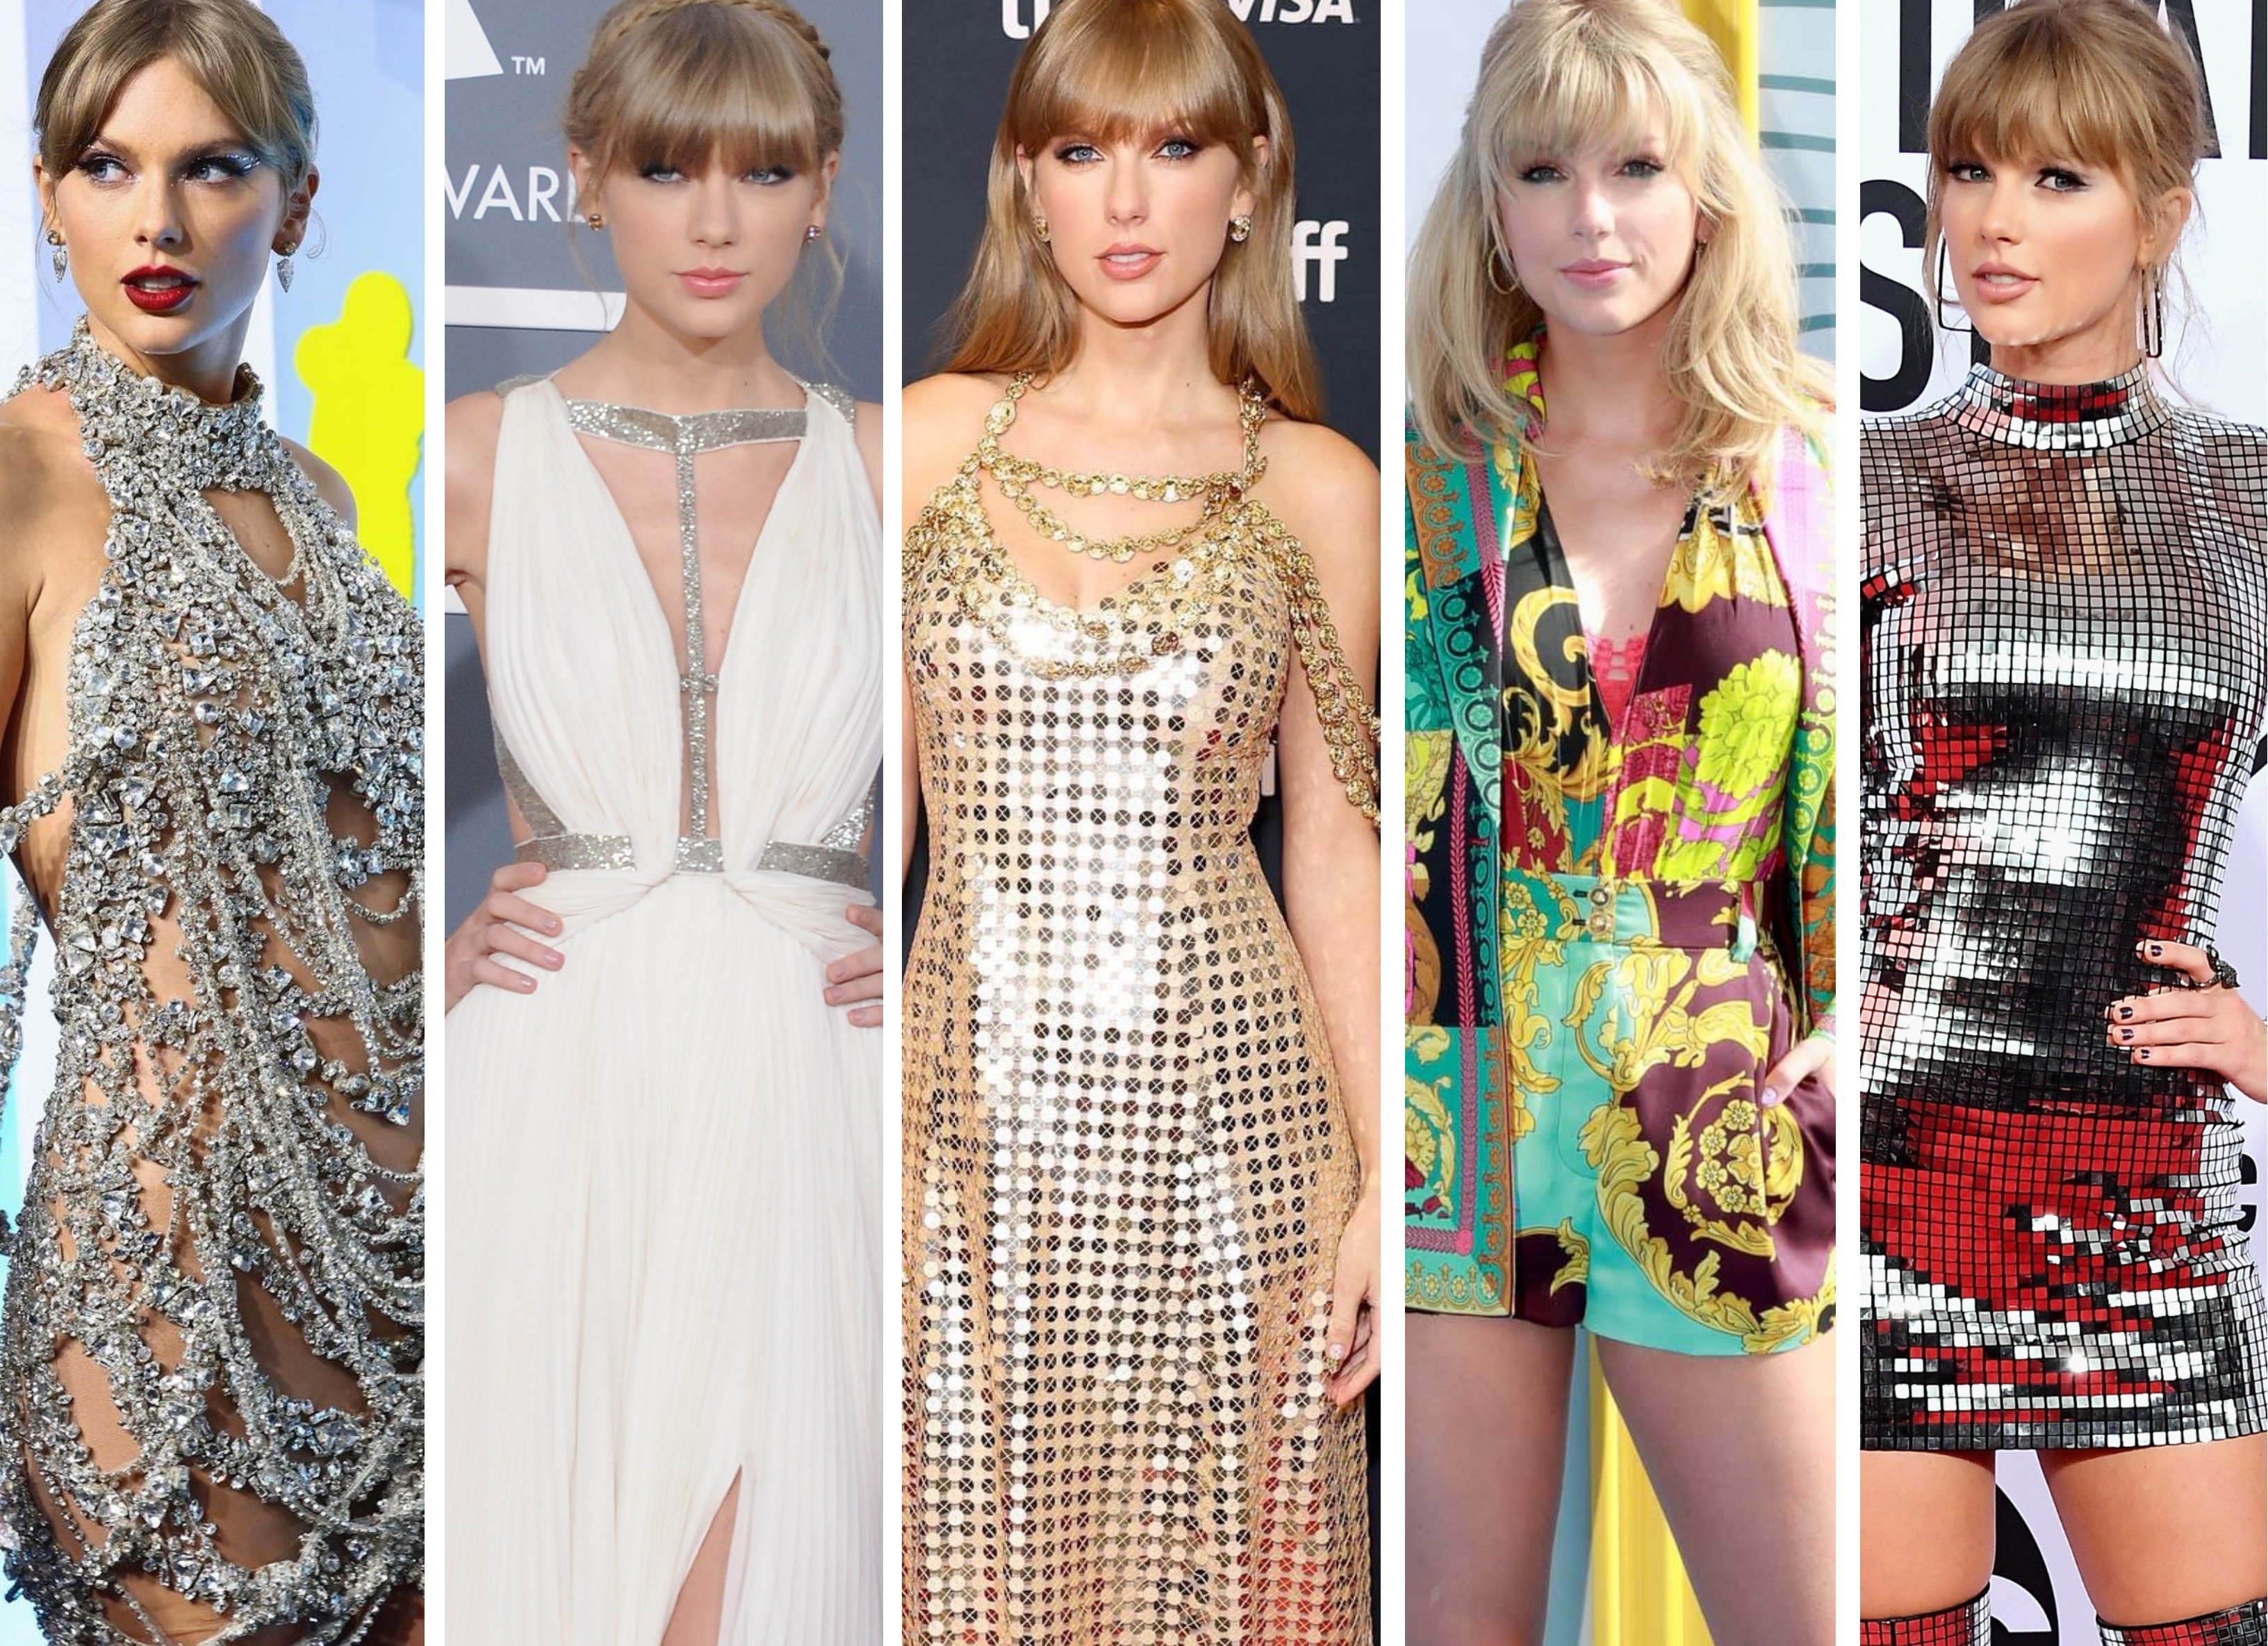 Taylor Swift loves wearing luxury designers to red carpet events. Photos: @oscardelarenta/Instagram; Film Magic; @louisvuitton/Instagram; @Versace/Facebook; WireImage